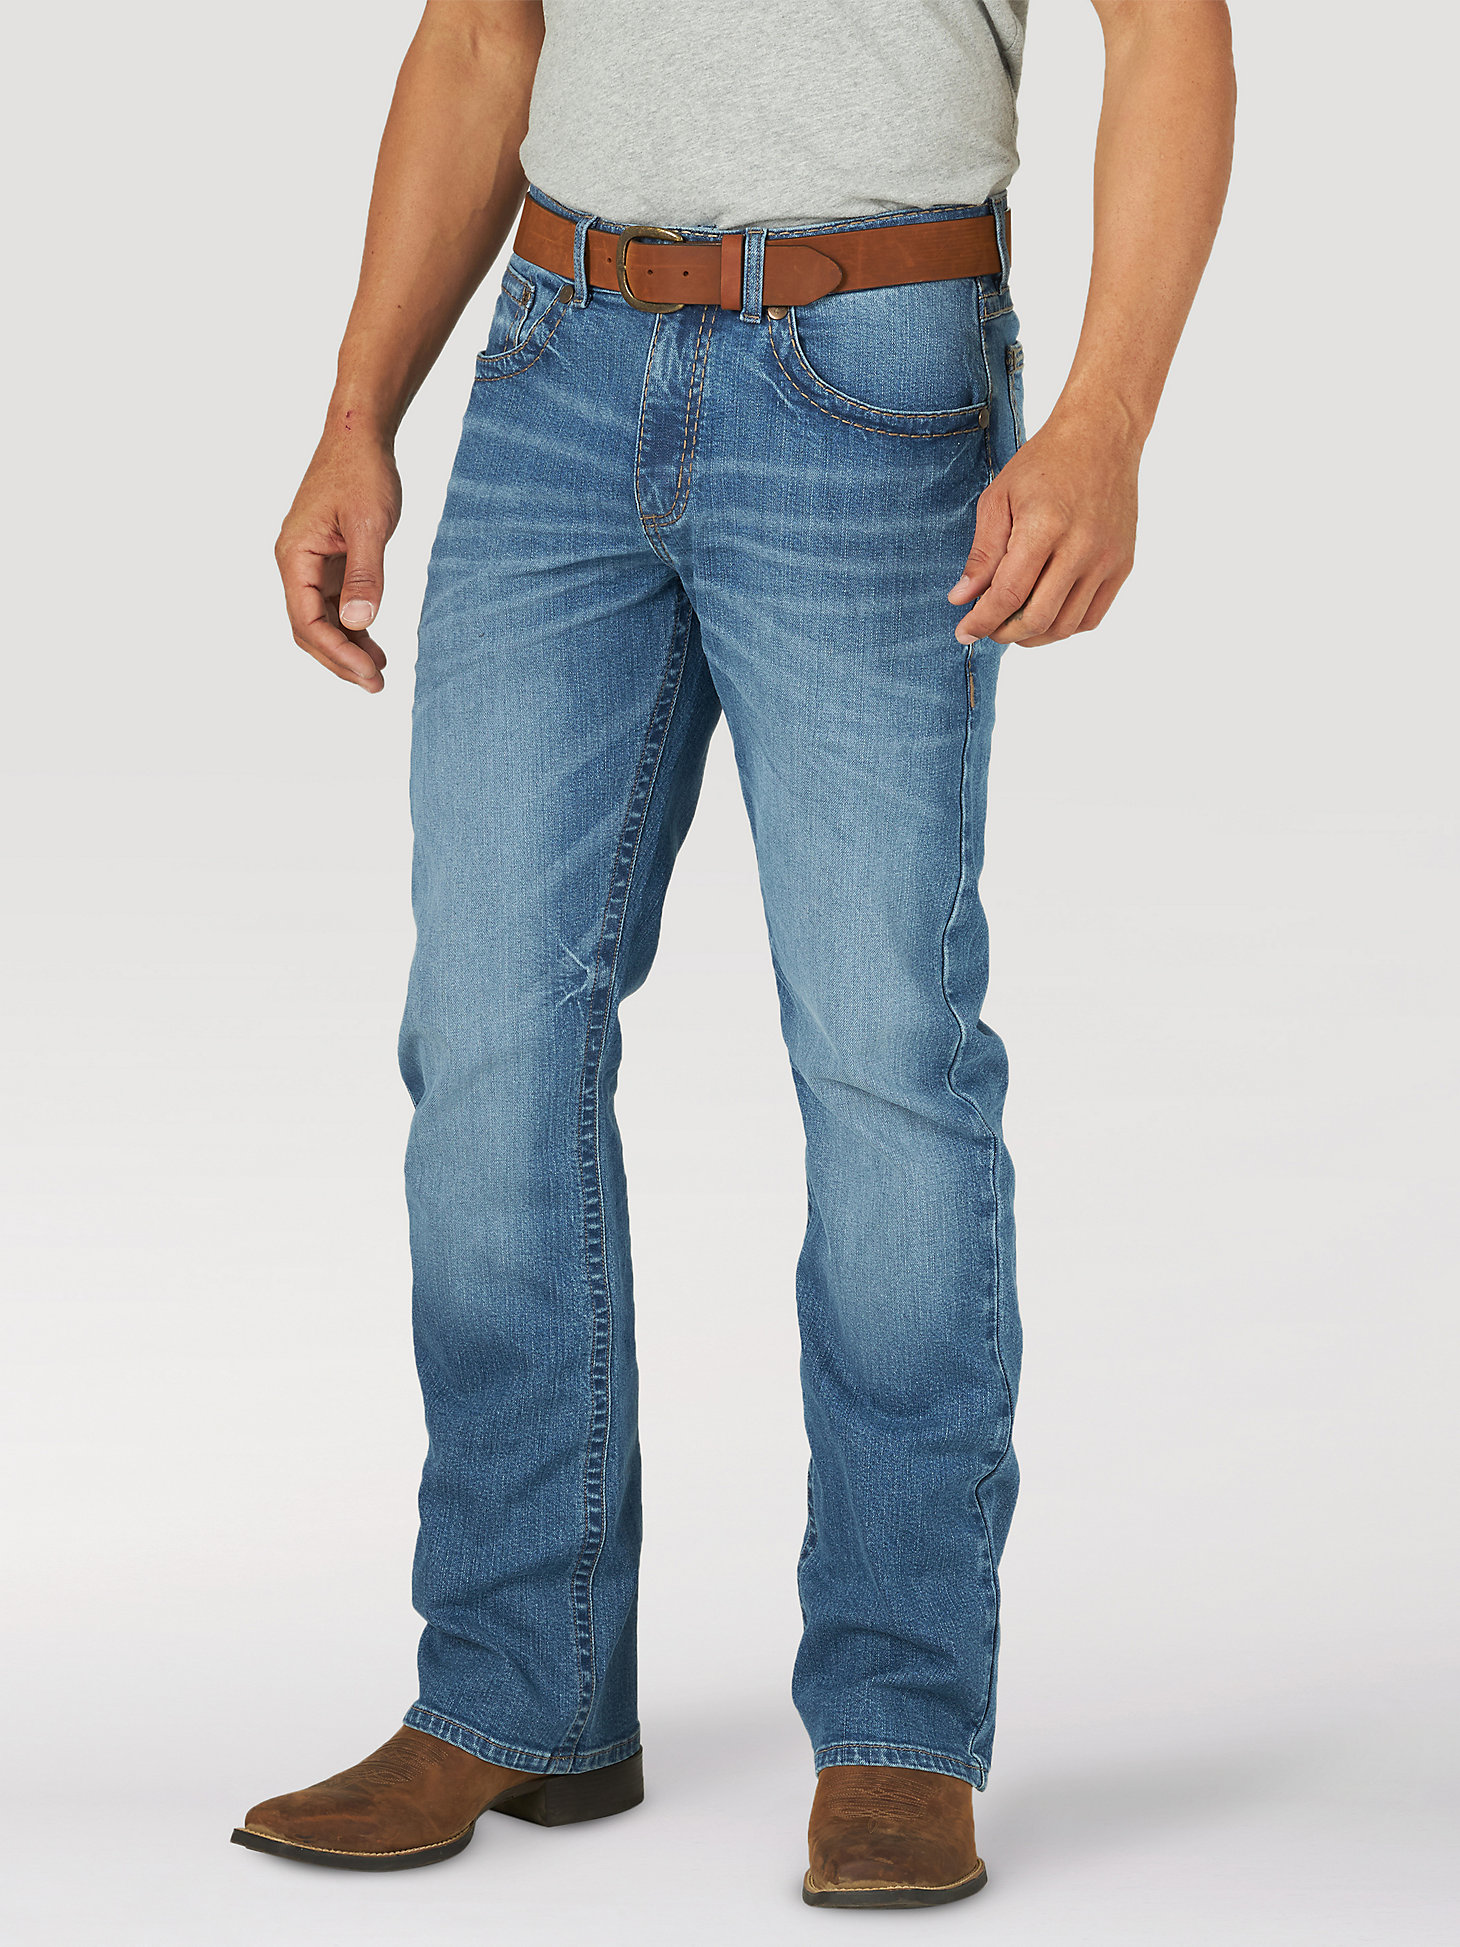 Men's NWT WRANGLER ROCK 47 Medium Wash Mid Rise Slim Fit Boot Cut Jeans MRB47LY